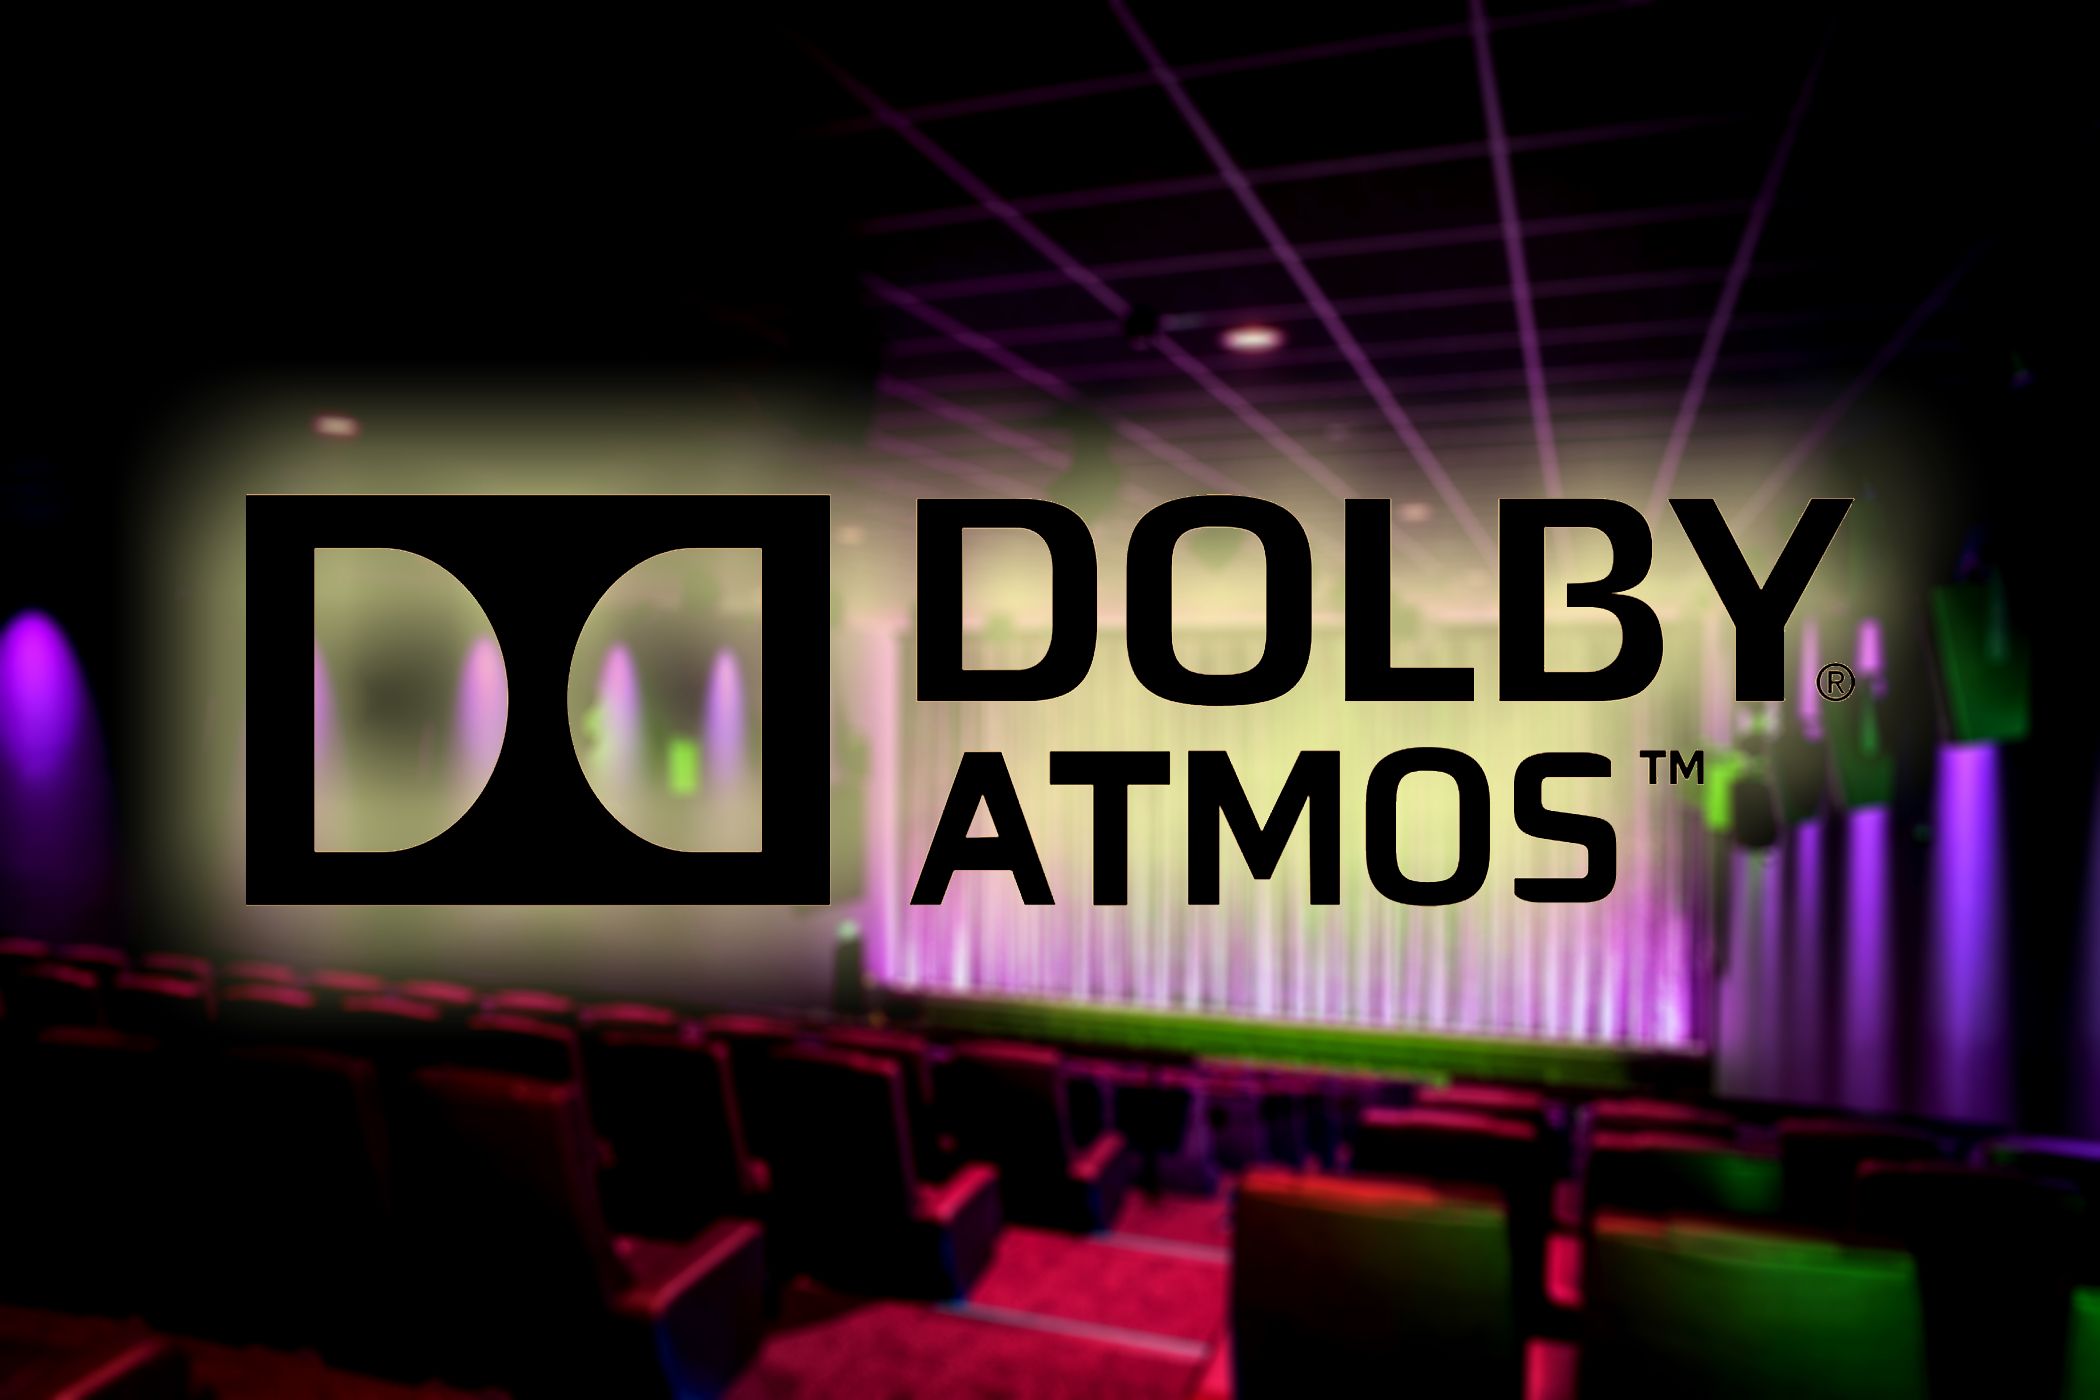 dolby atmos logo on cinema theatre background